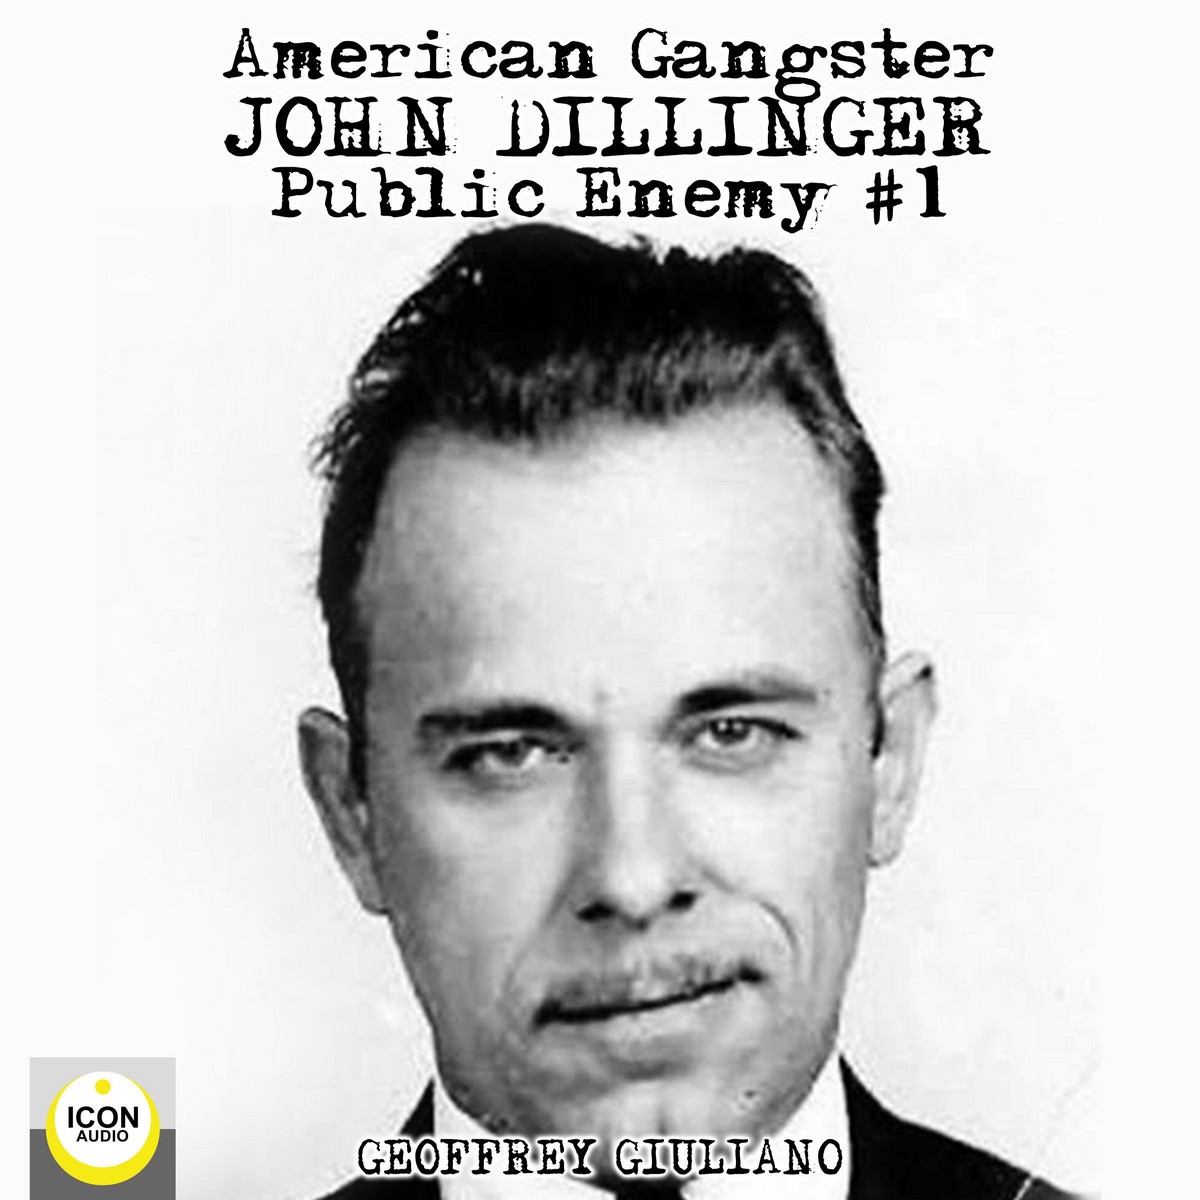 American Gangster; John Dillinger, Public Enemy #1